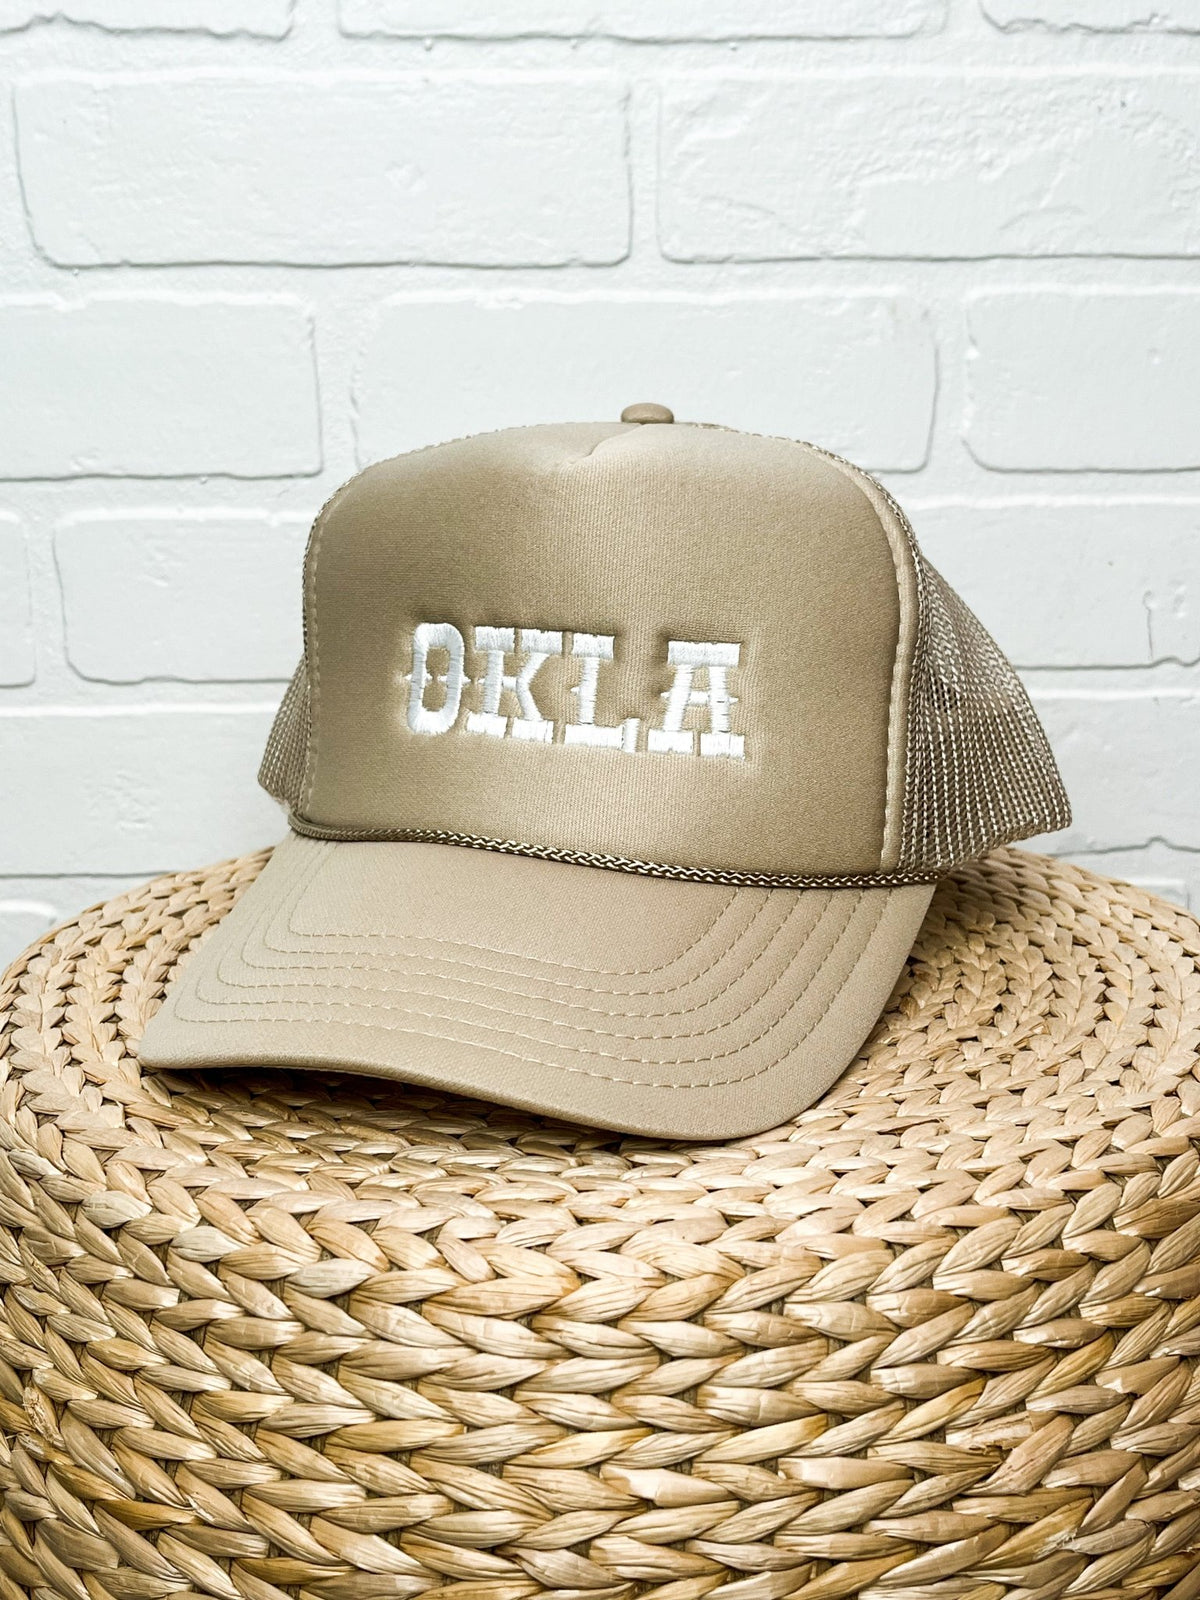 OKLA western font trucker hat khaki - Trendy Hats at Lush Fashion Lounge Boutique in Oklahoma City